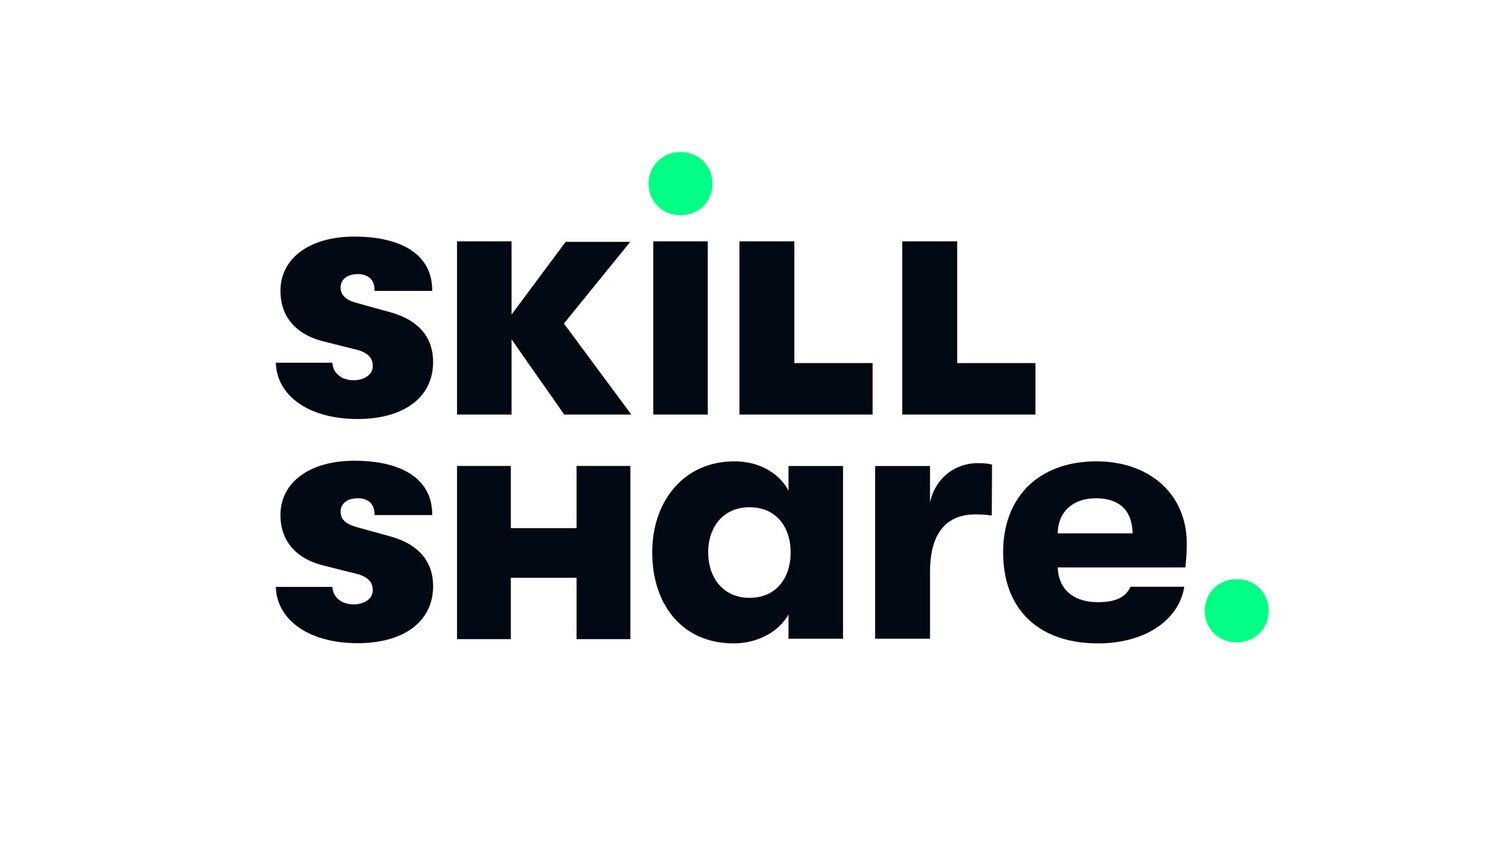 Skill Share logo